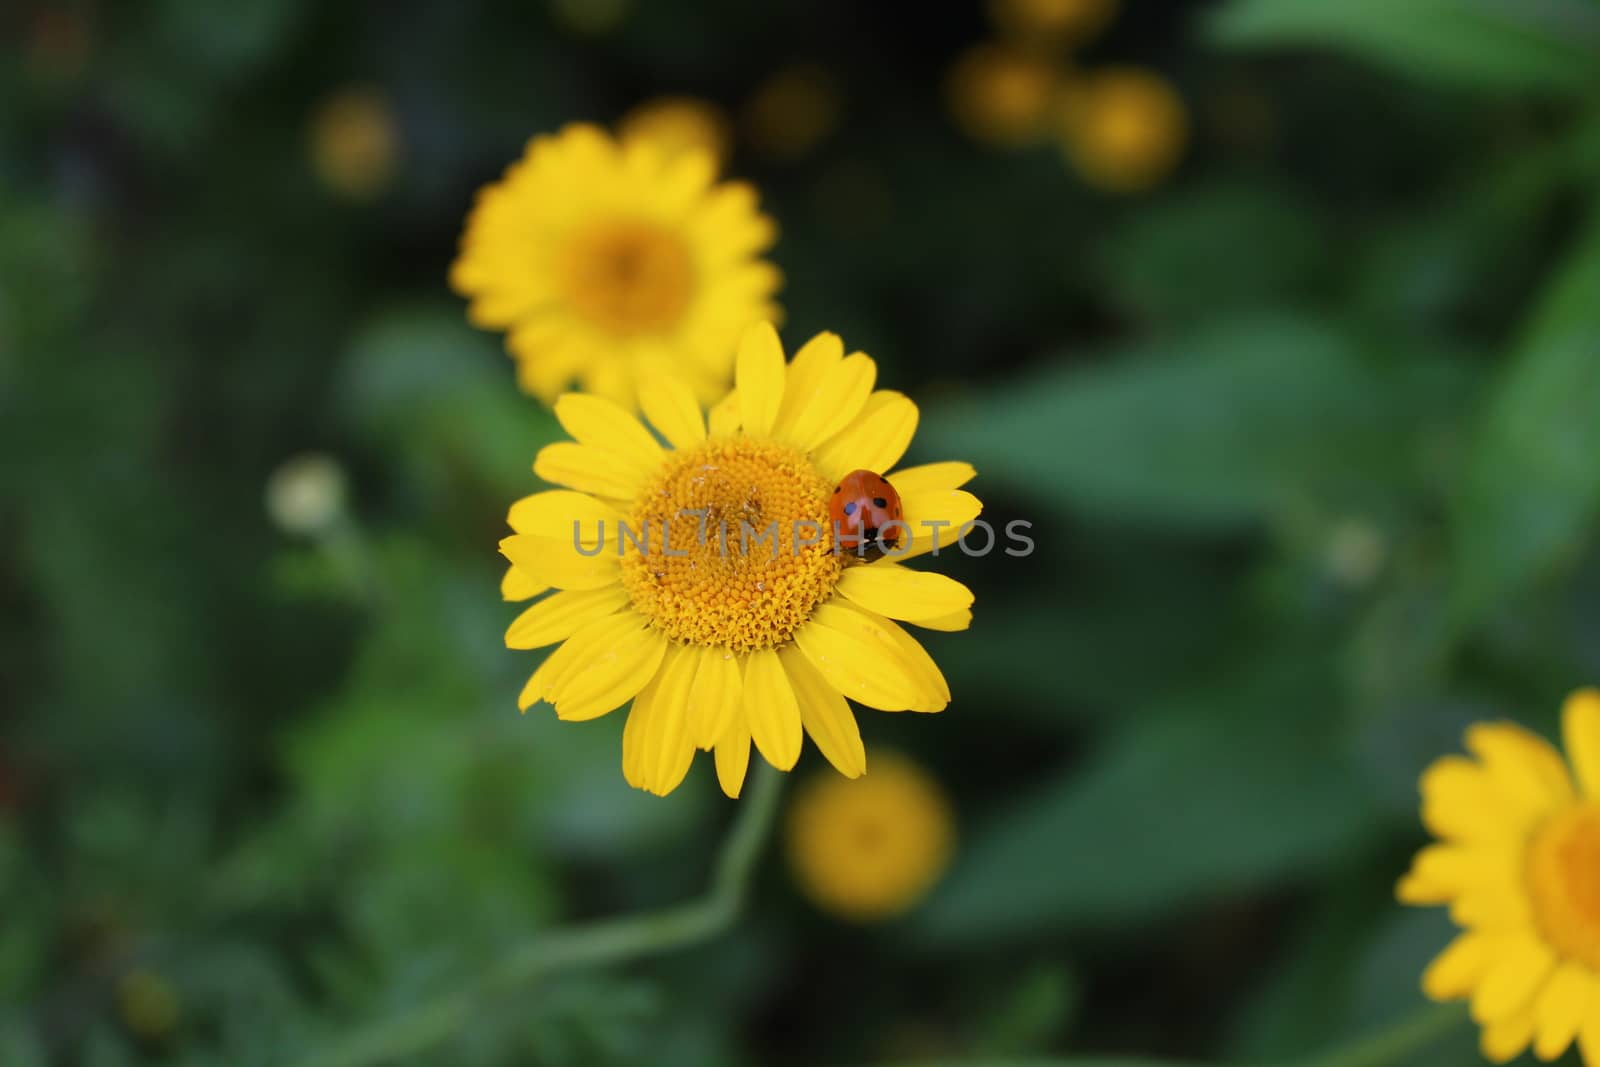 ladybird on a yellow flower by martina_unbehauen